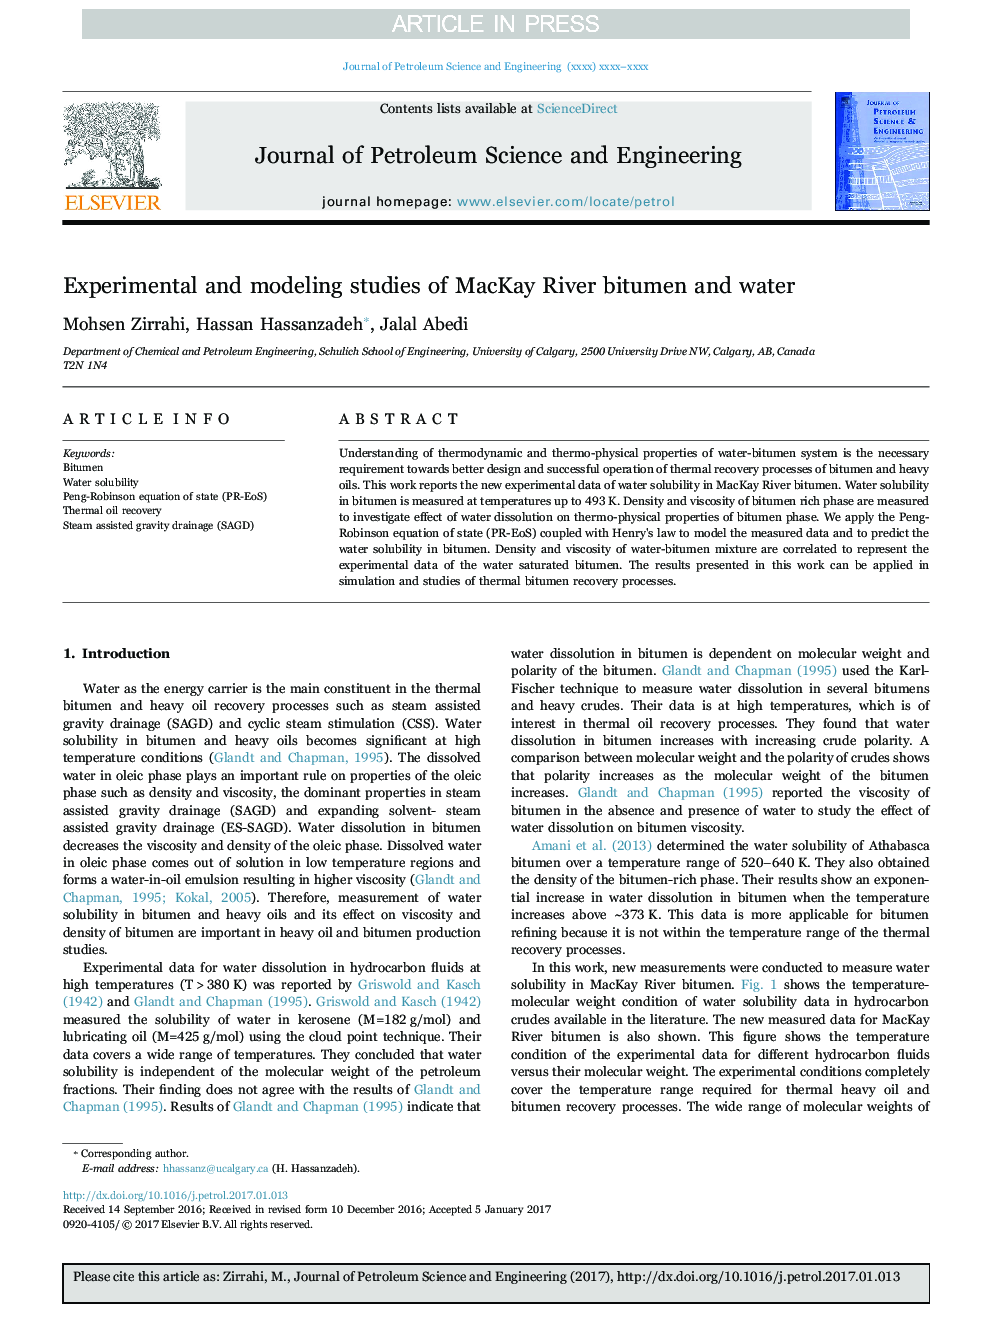 Experimental and modeling studies of MacKay River bitumen and water